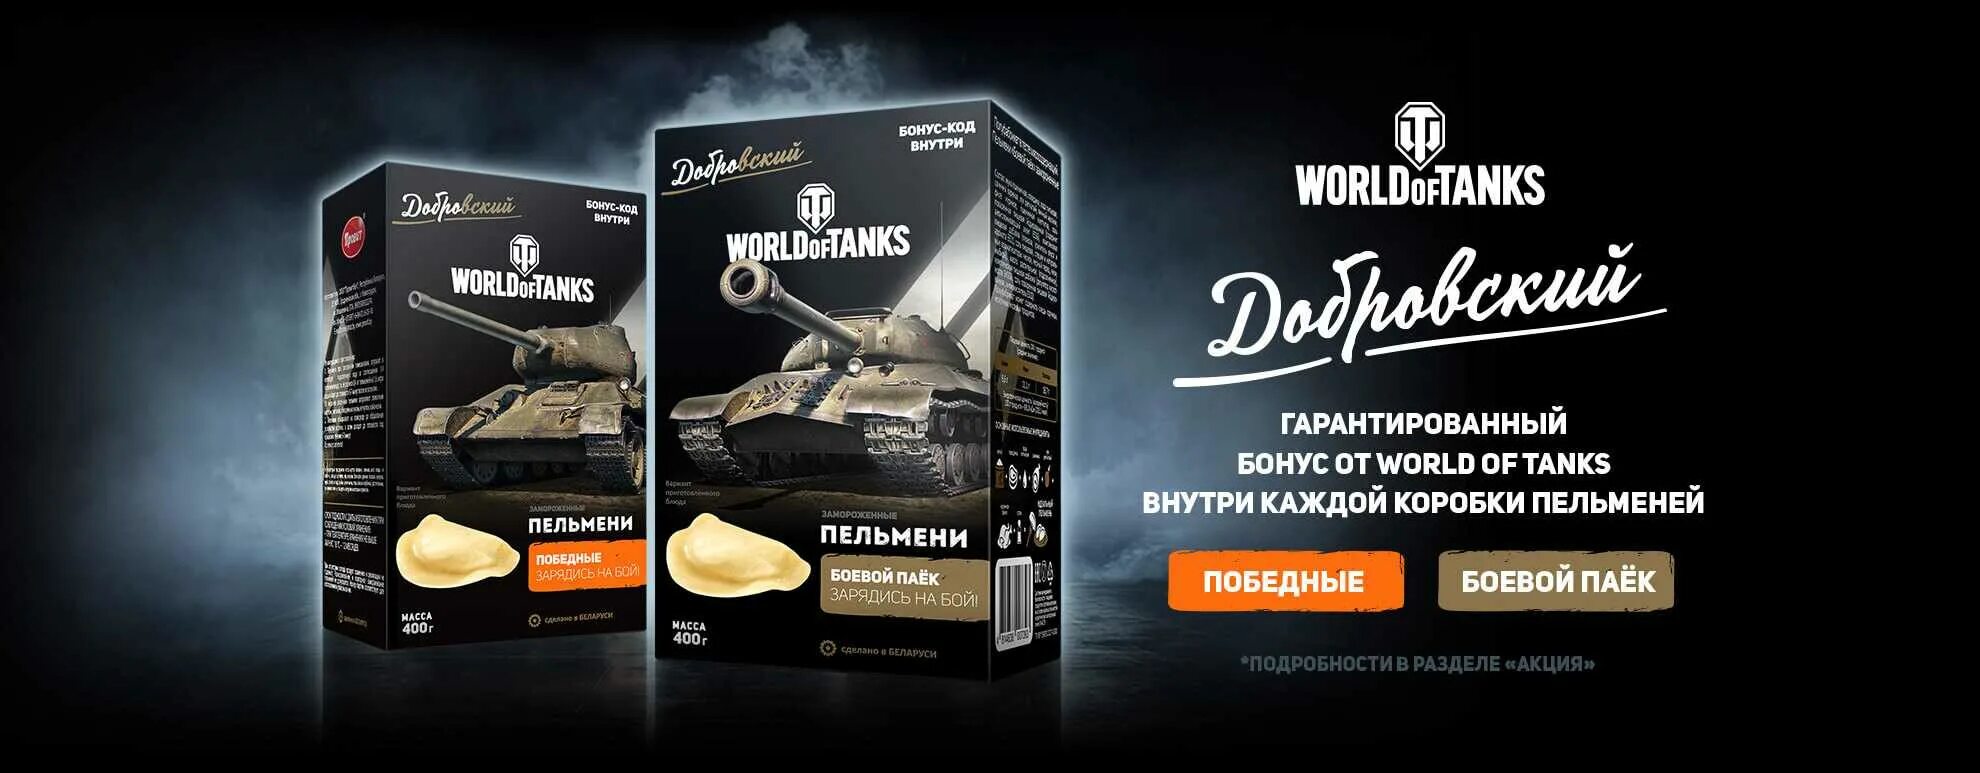 Пельмени Добровский World of Tanks. Пельмени ворд оф танкс. Бонус код для World of Tanks. Сухарики World of Tanks.